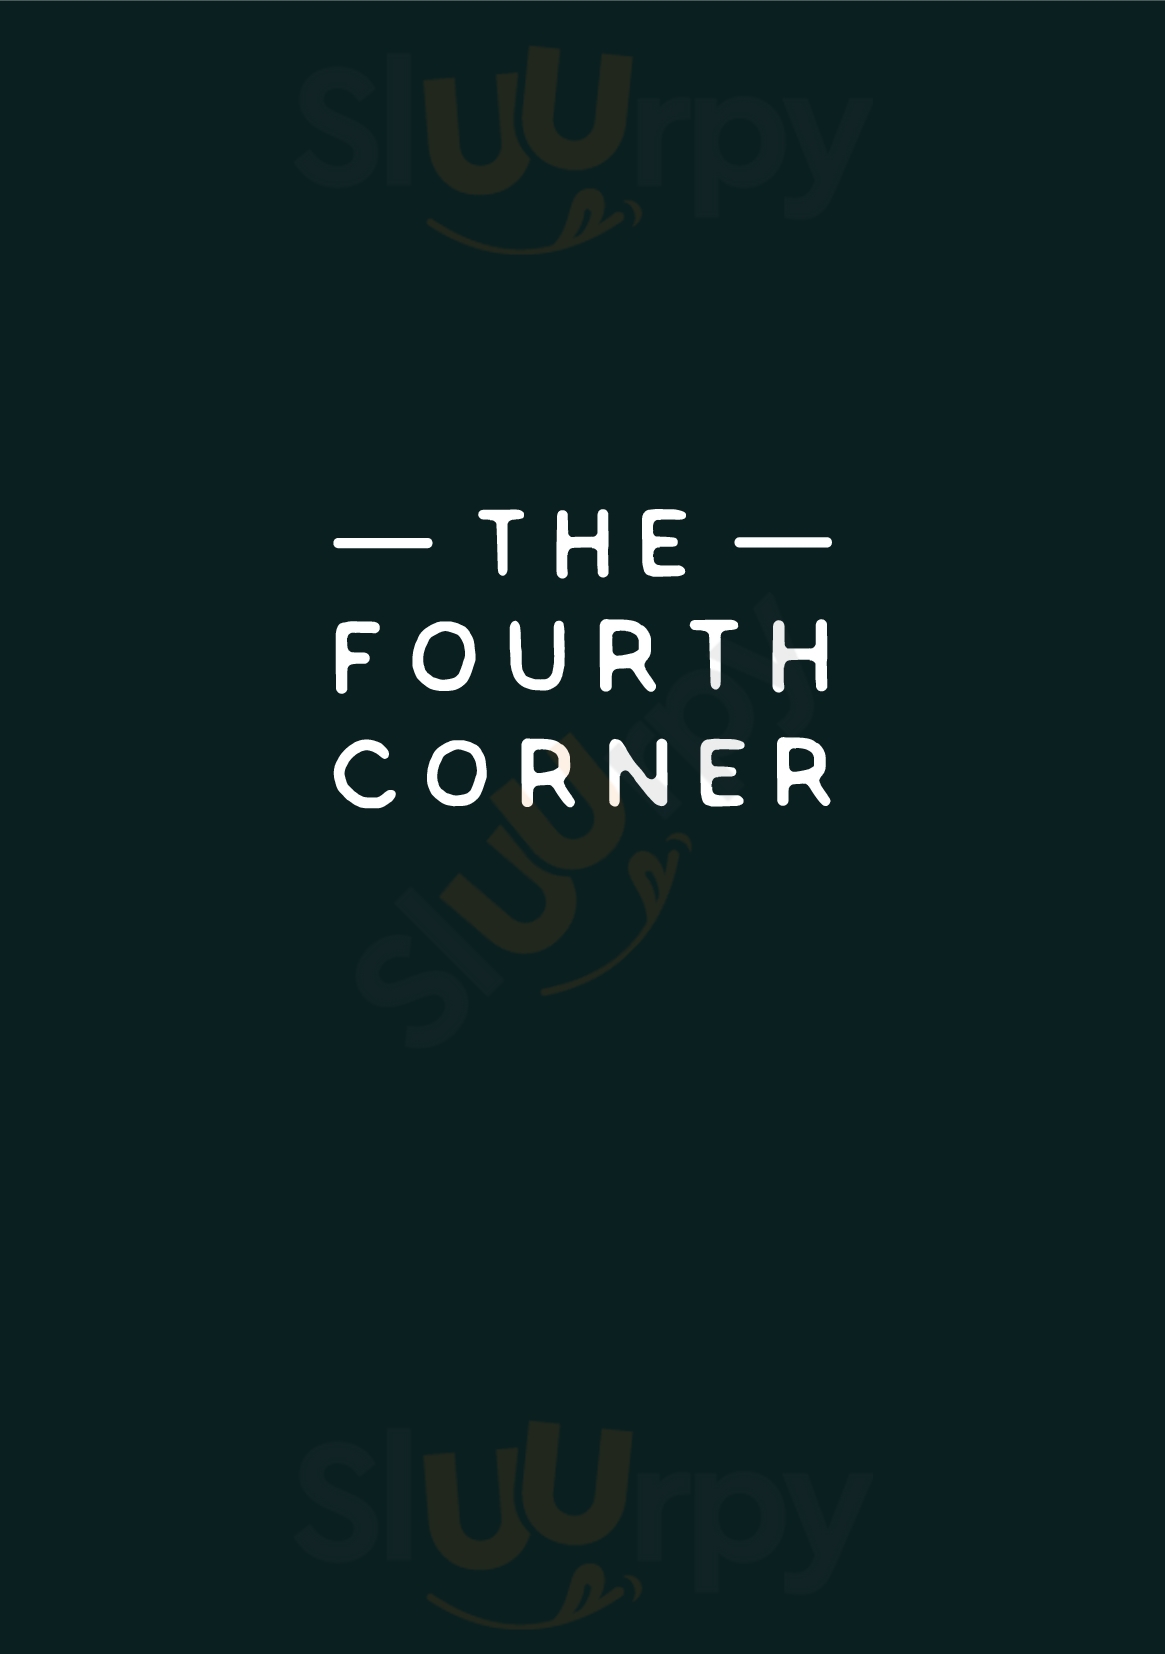 The Fourth Corner Dublin Menu - 1